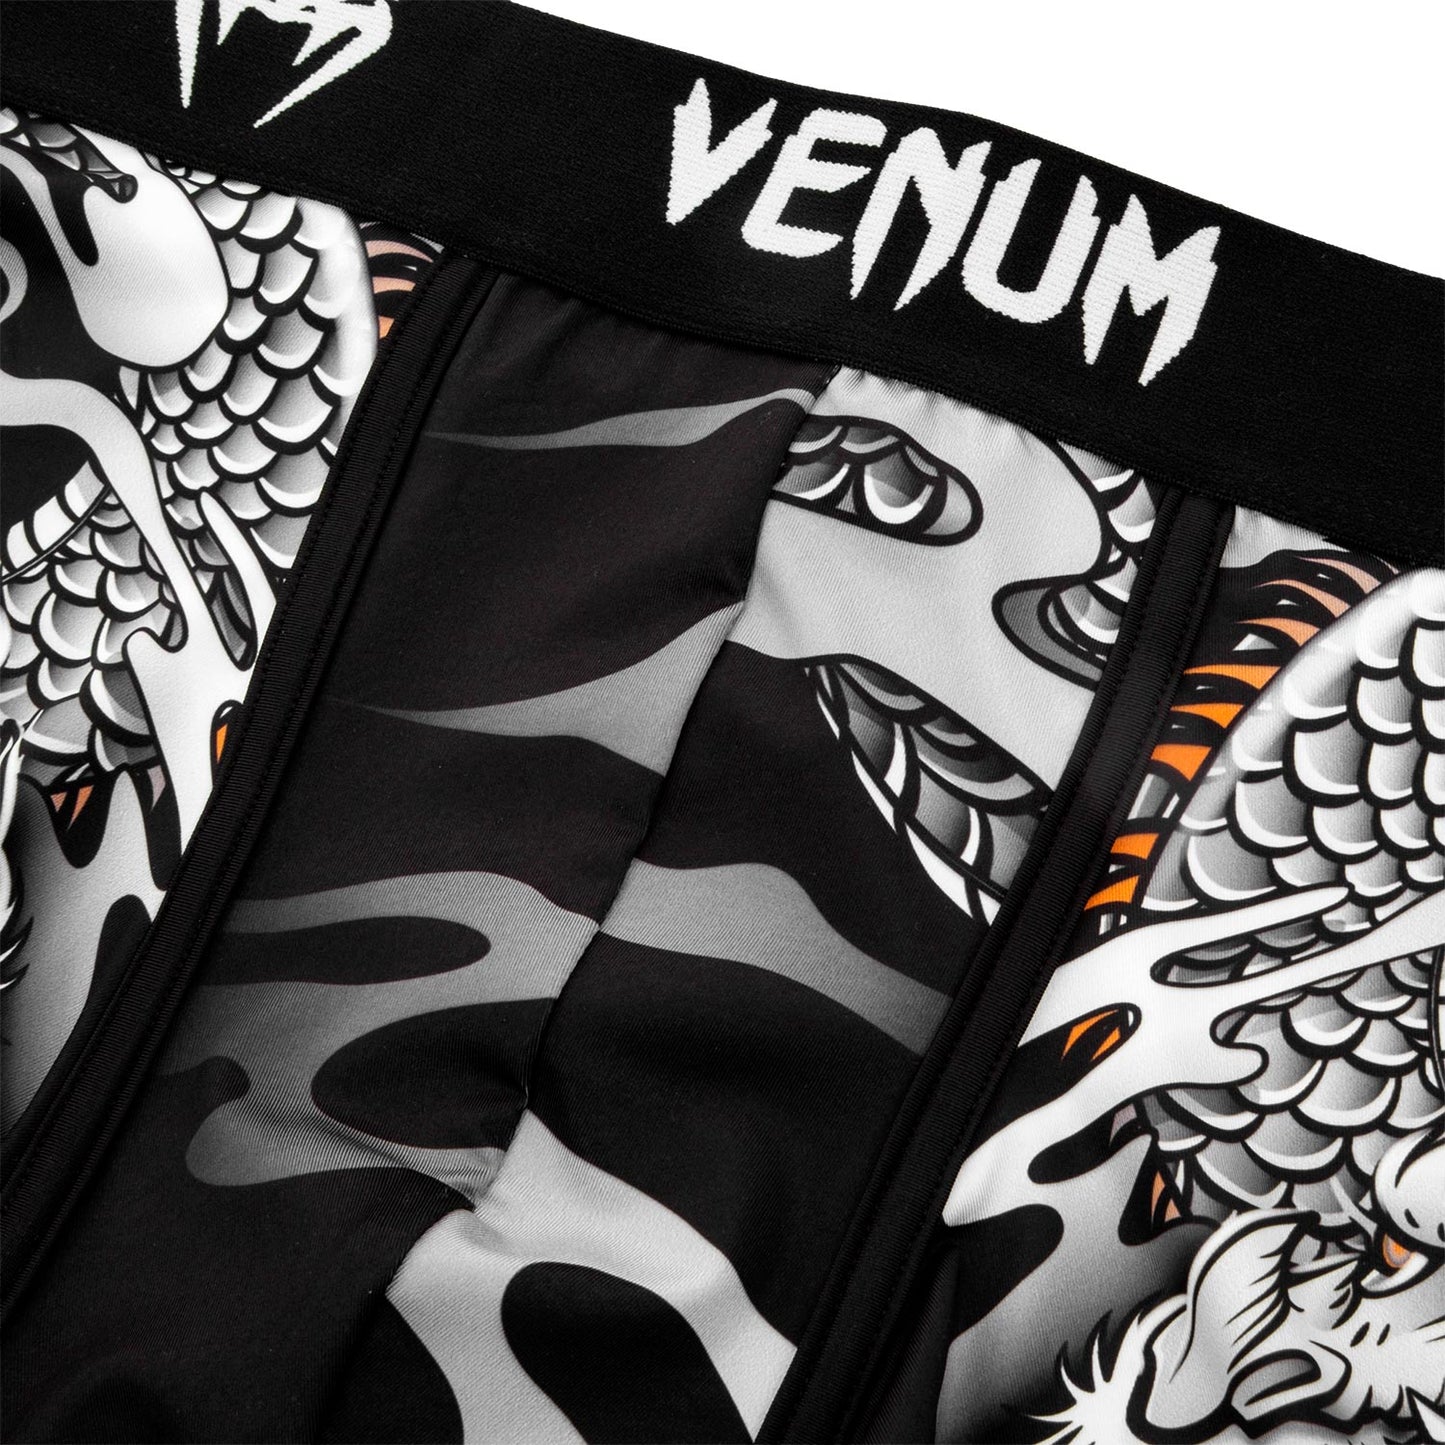 Venum Dragon's Flight Boxer - Black/White